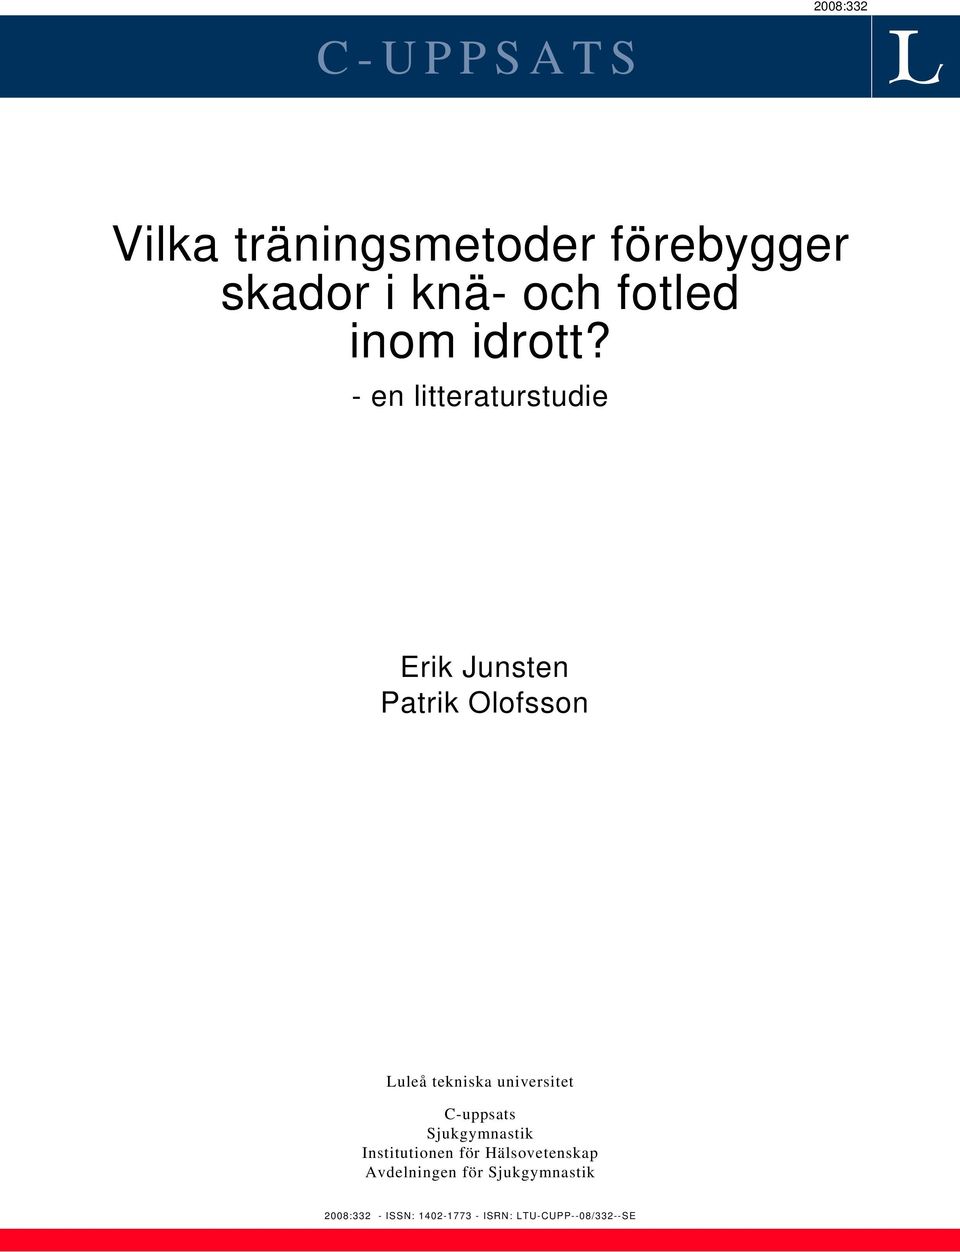 - en litteraturstudie Erik Junsten Patrik Olofsson Luleå tekniska universitet